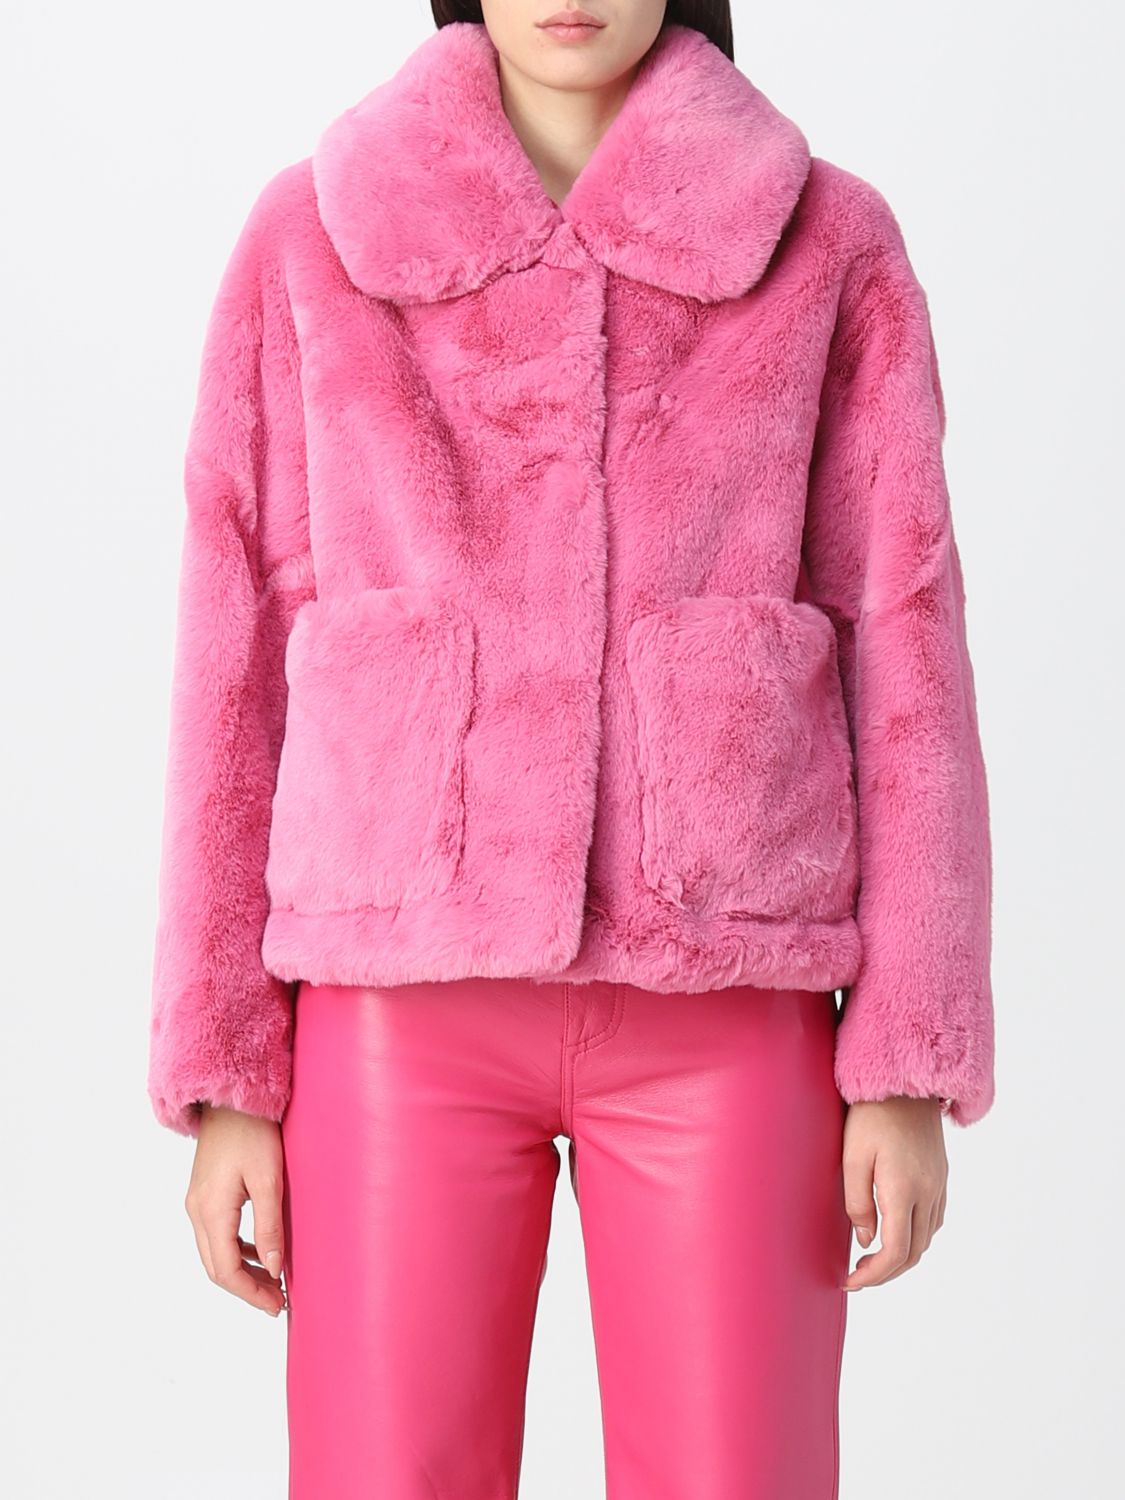 JAKKE: fur coats for woman - Pink | Jakke fur coats J2220B online at ...